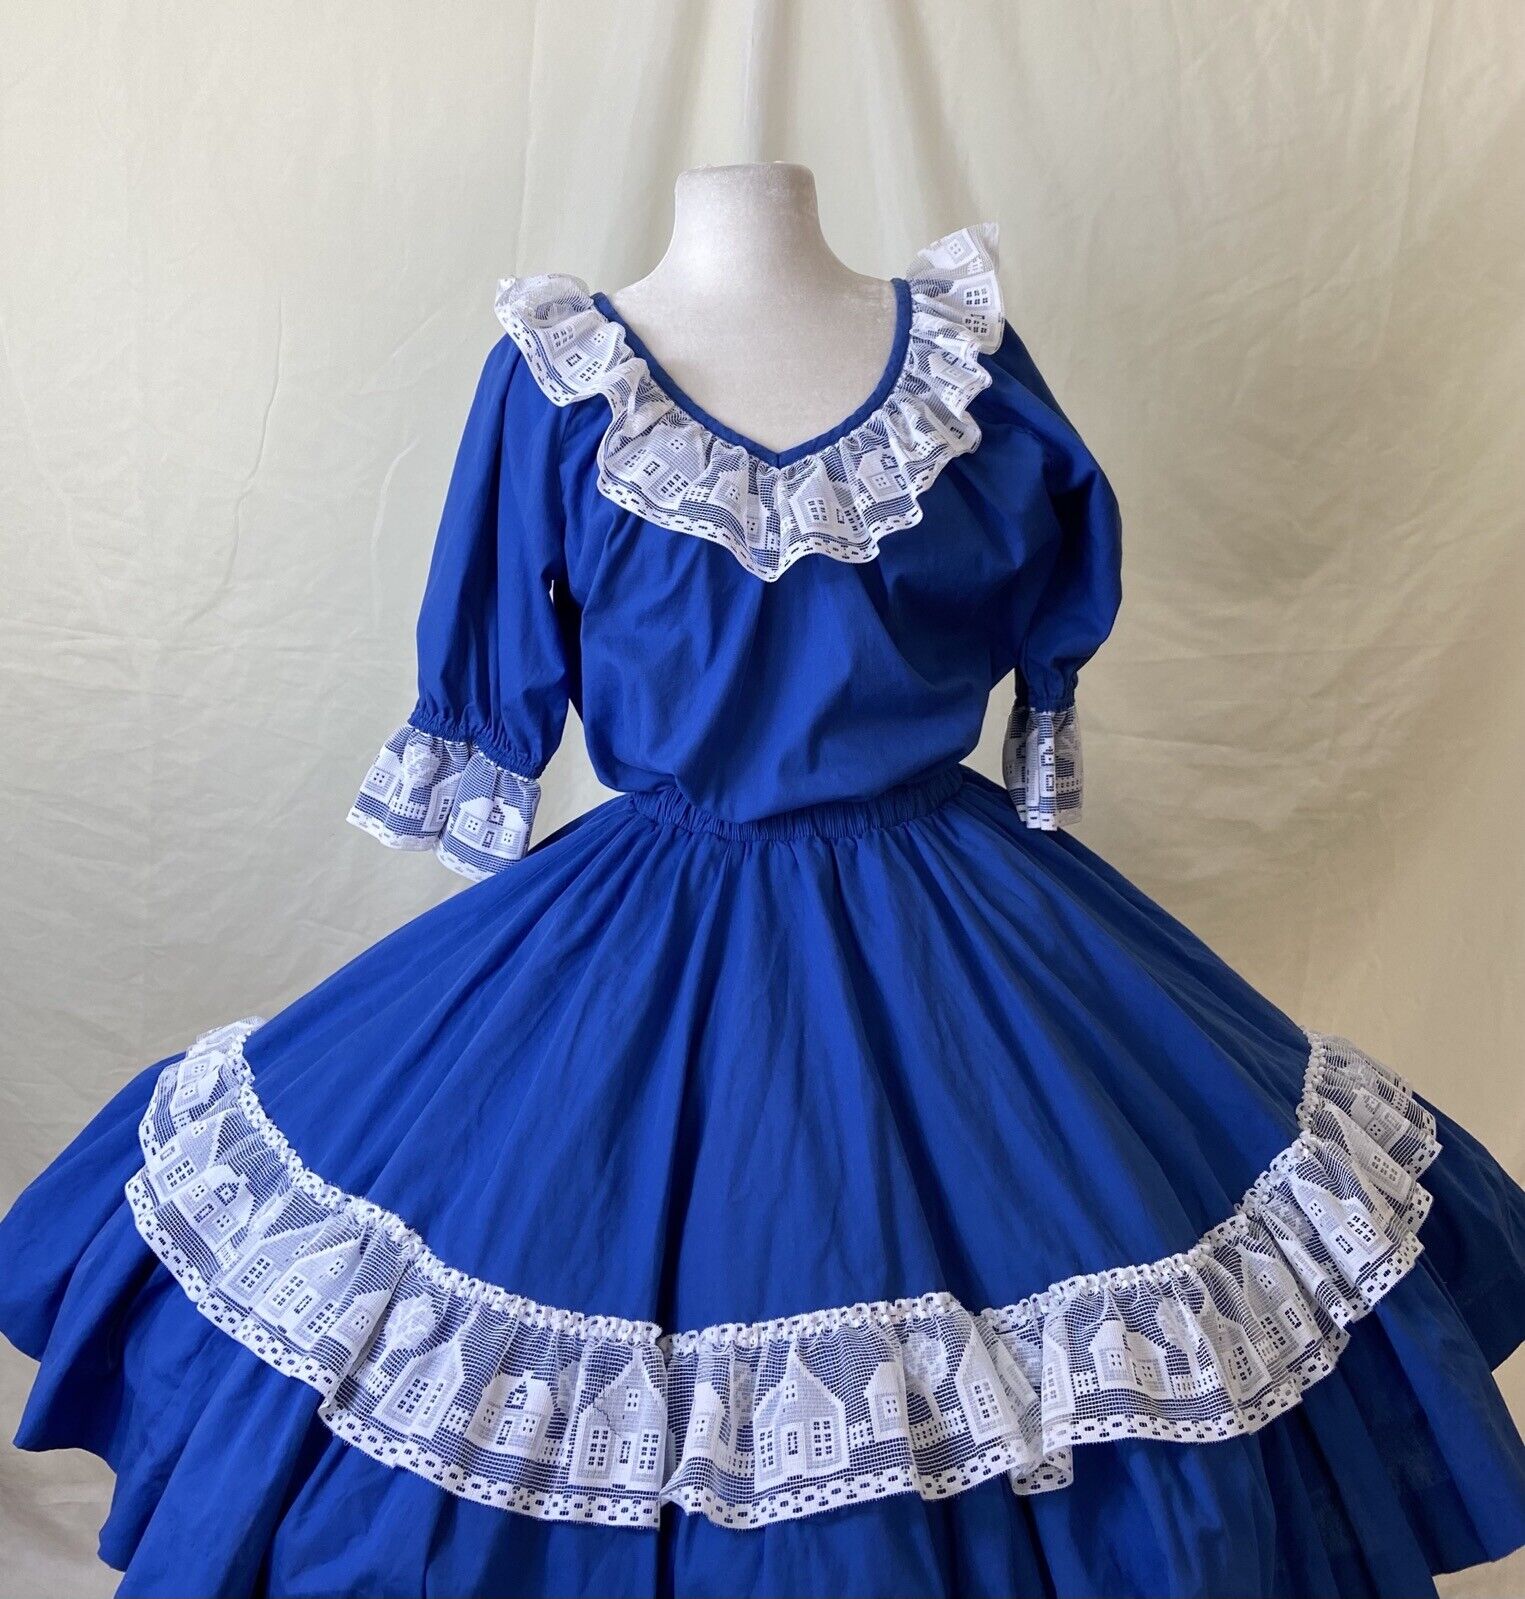 Square Dance Dress 2 pc Outfit Skirt Blouse Royal Blue White Lace Trim Rockmount